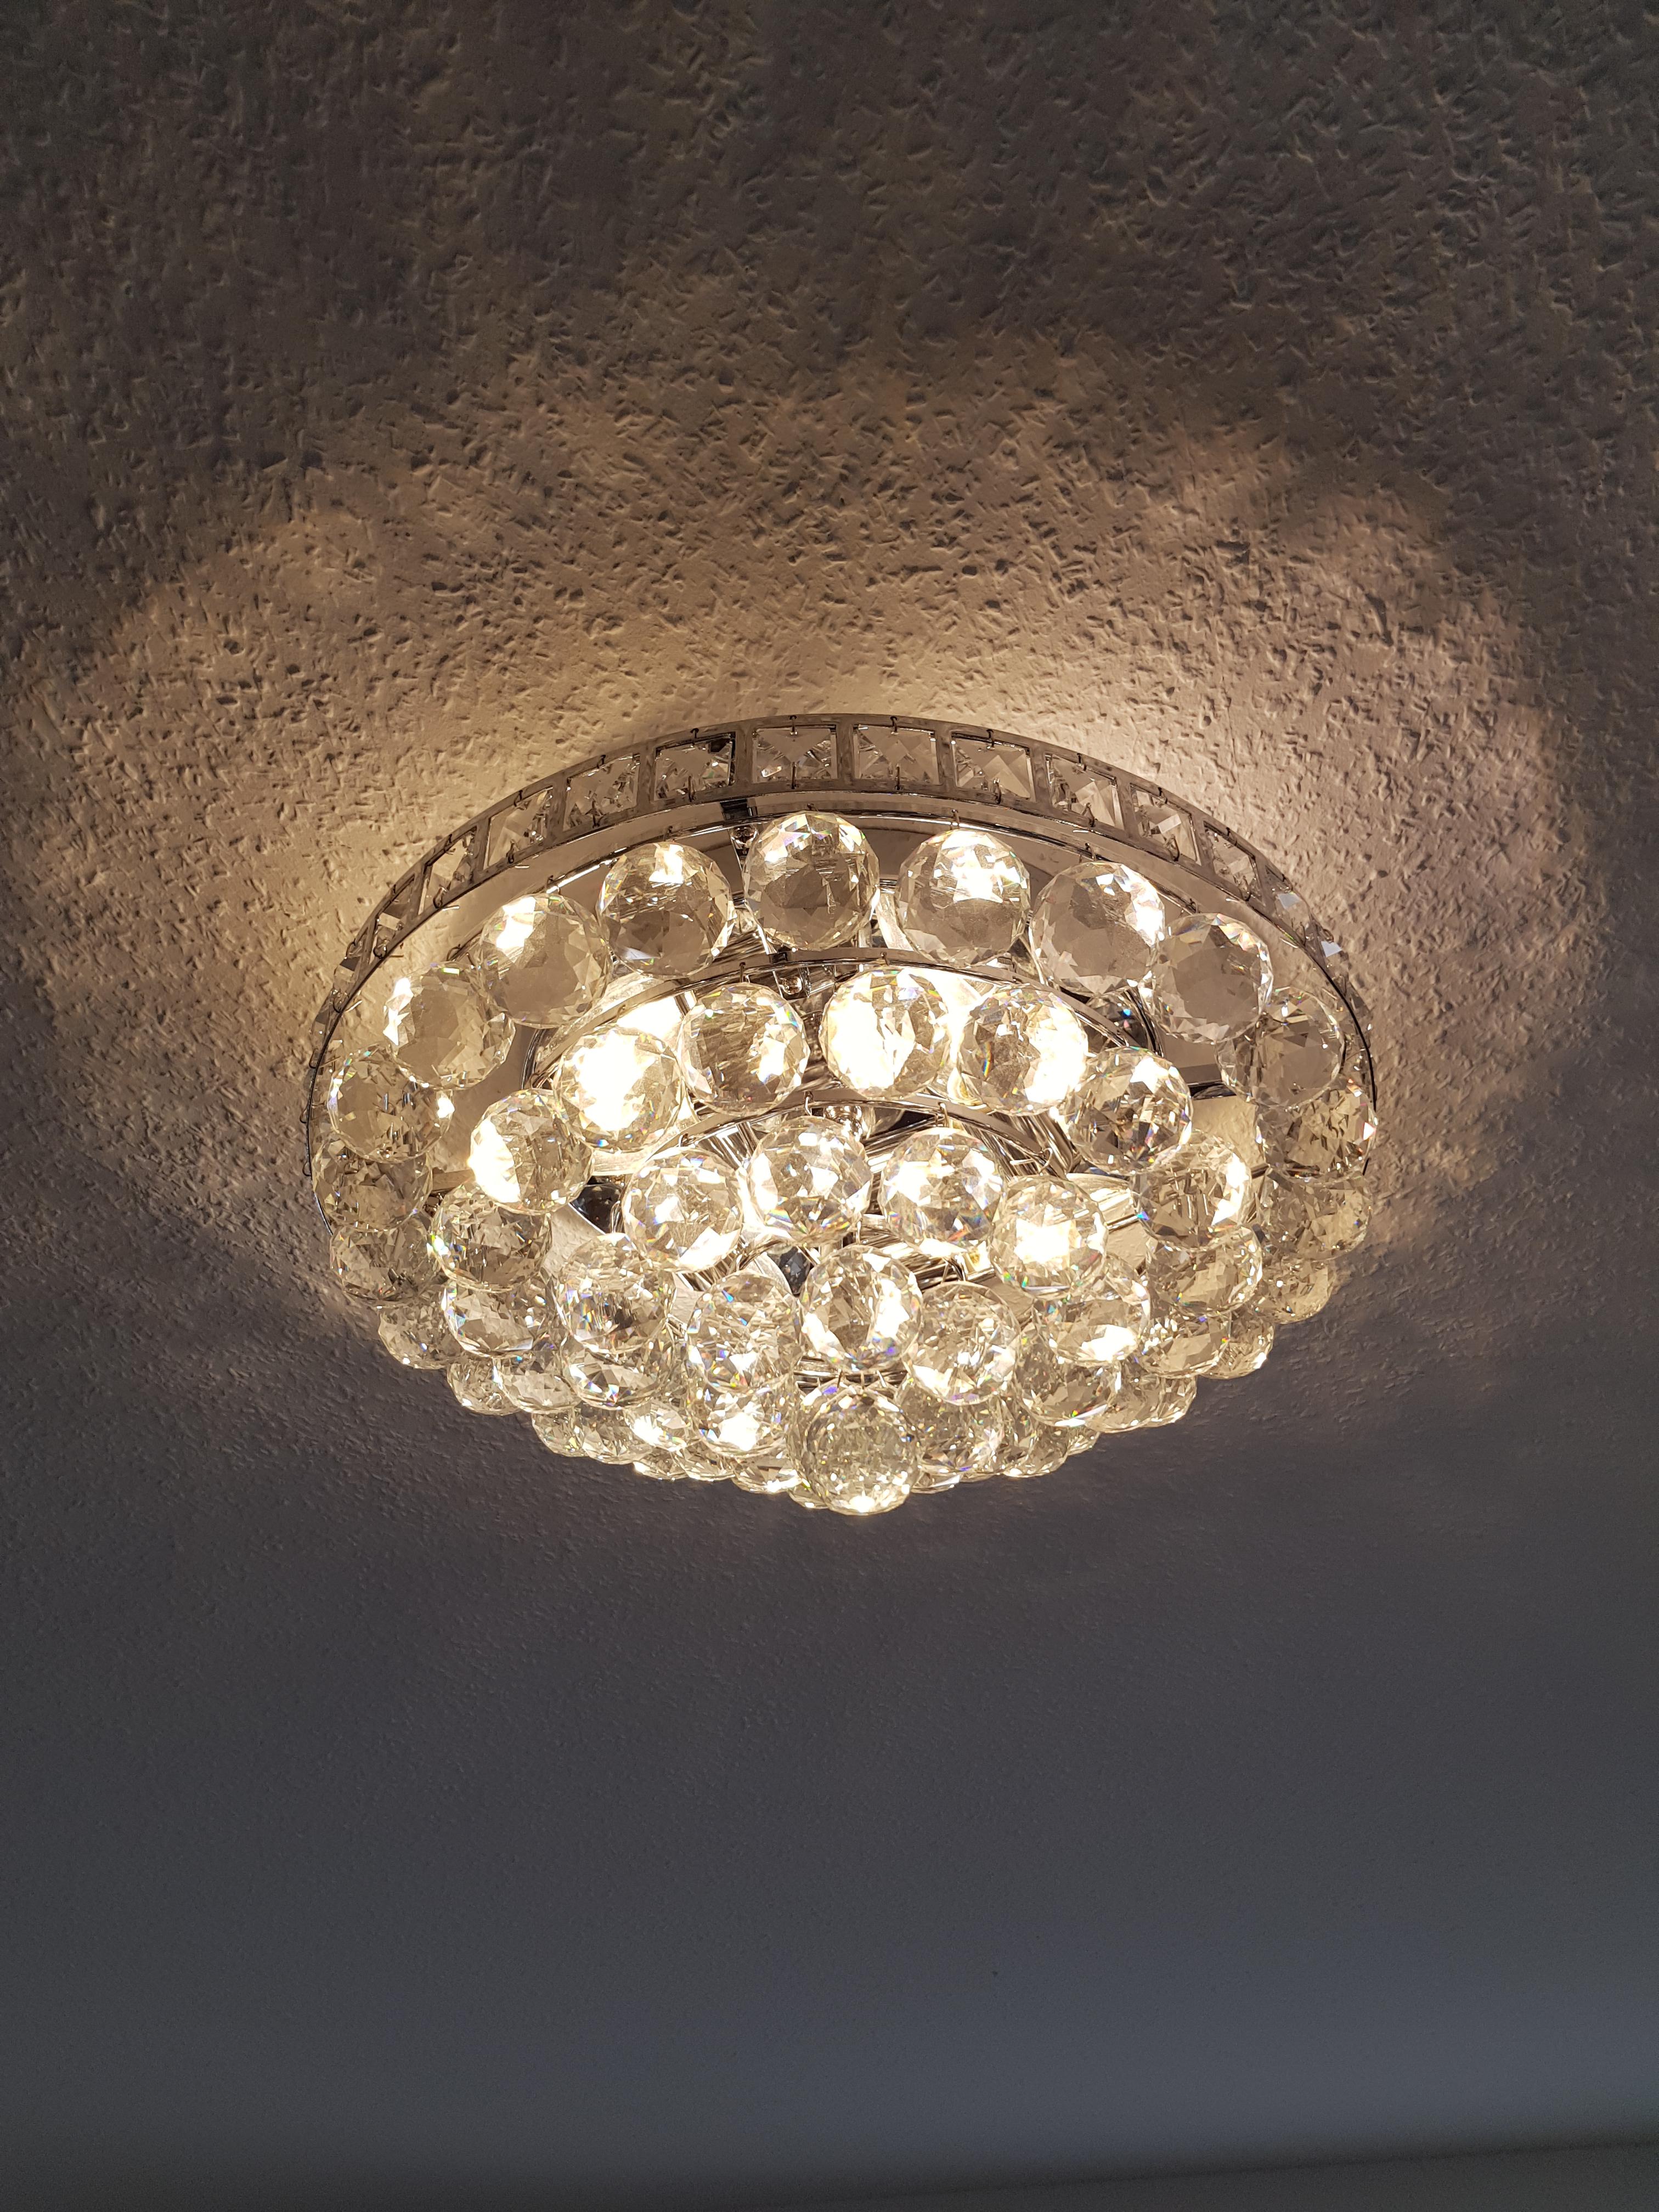 RH RUIVAST Flush Mount Ceiling Light Crystal Chandeliers Lighting 3 Light Fixtur 